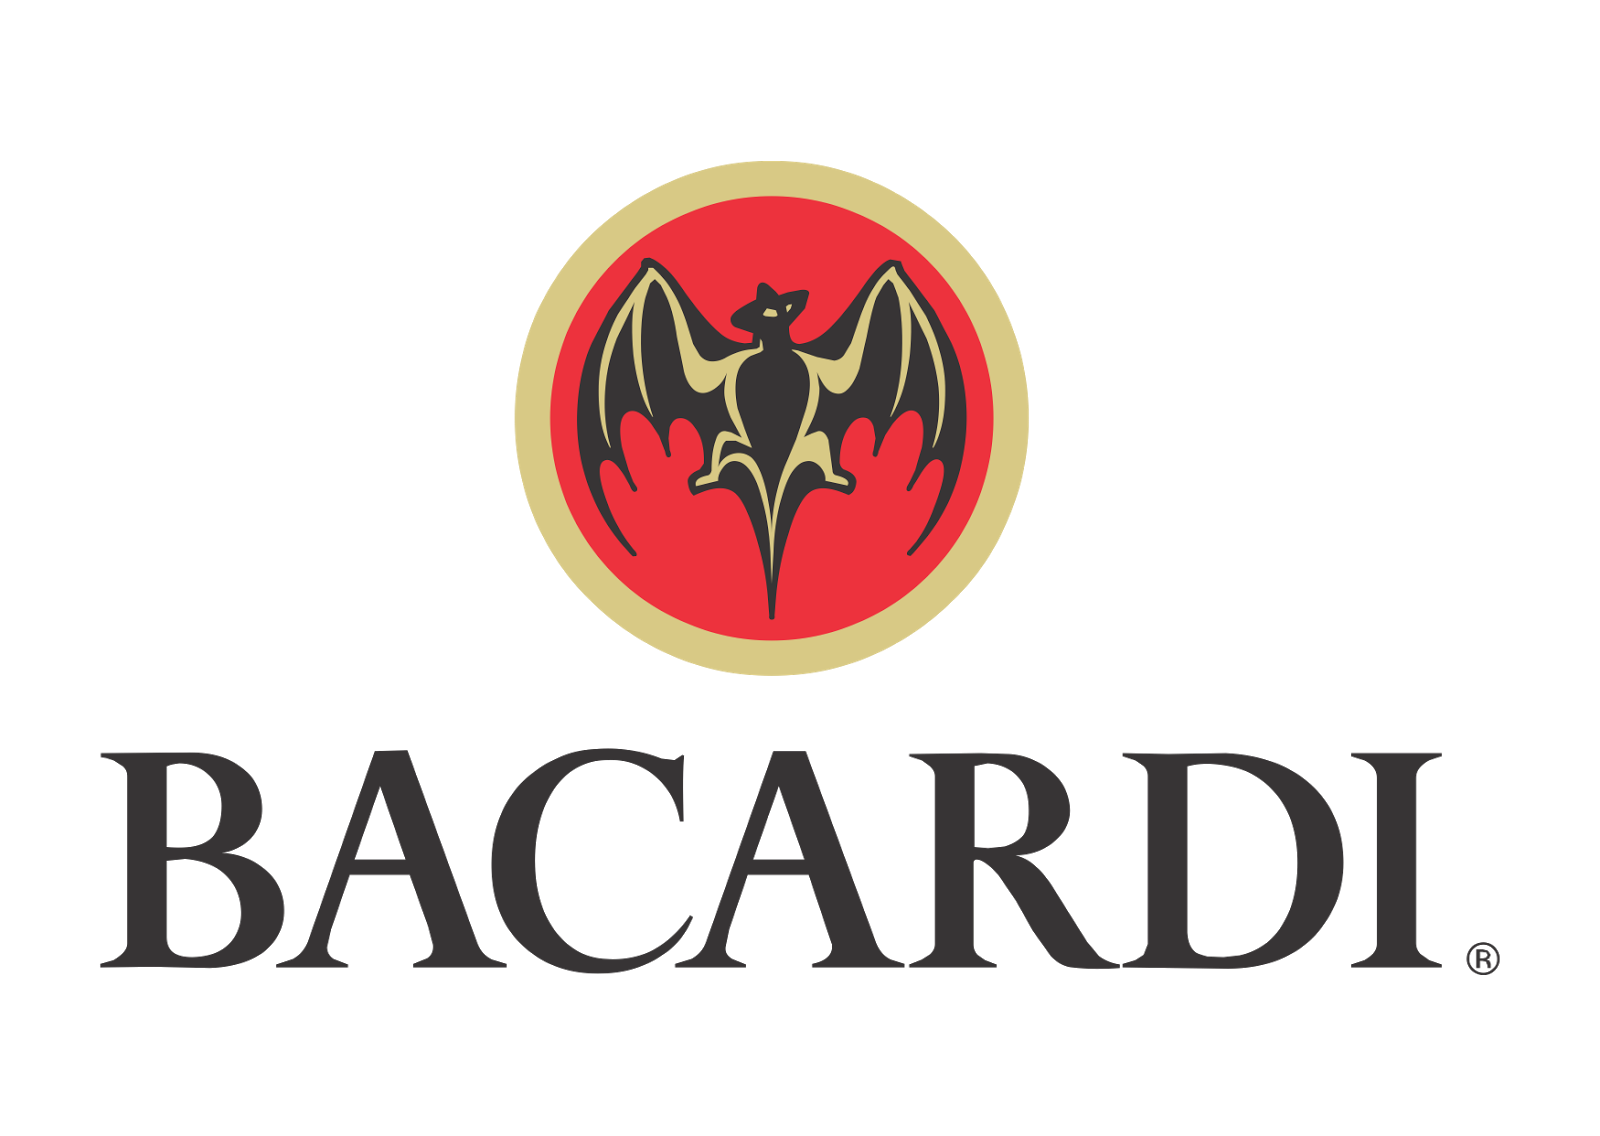 File:Bacardi Limited Logo.png